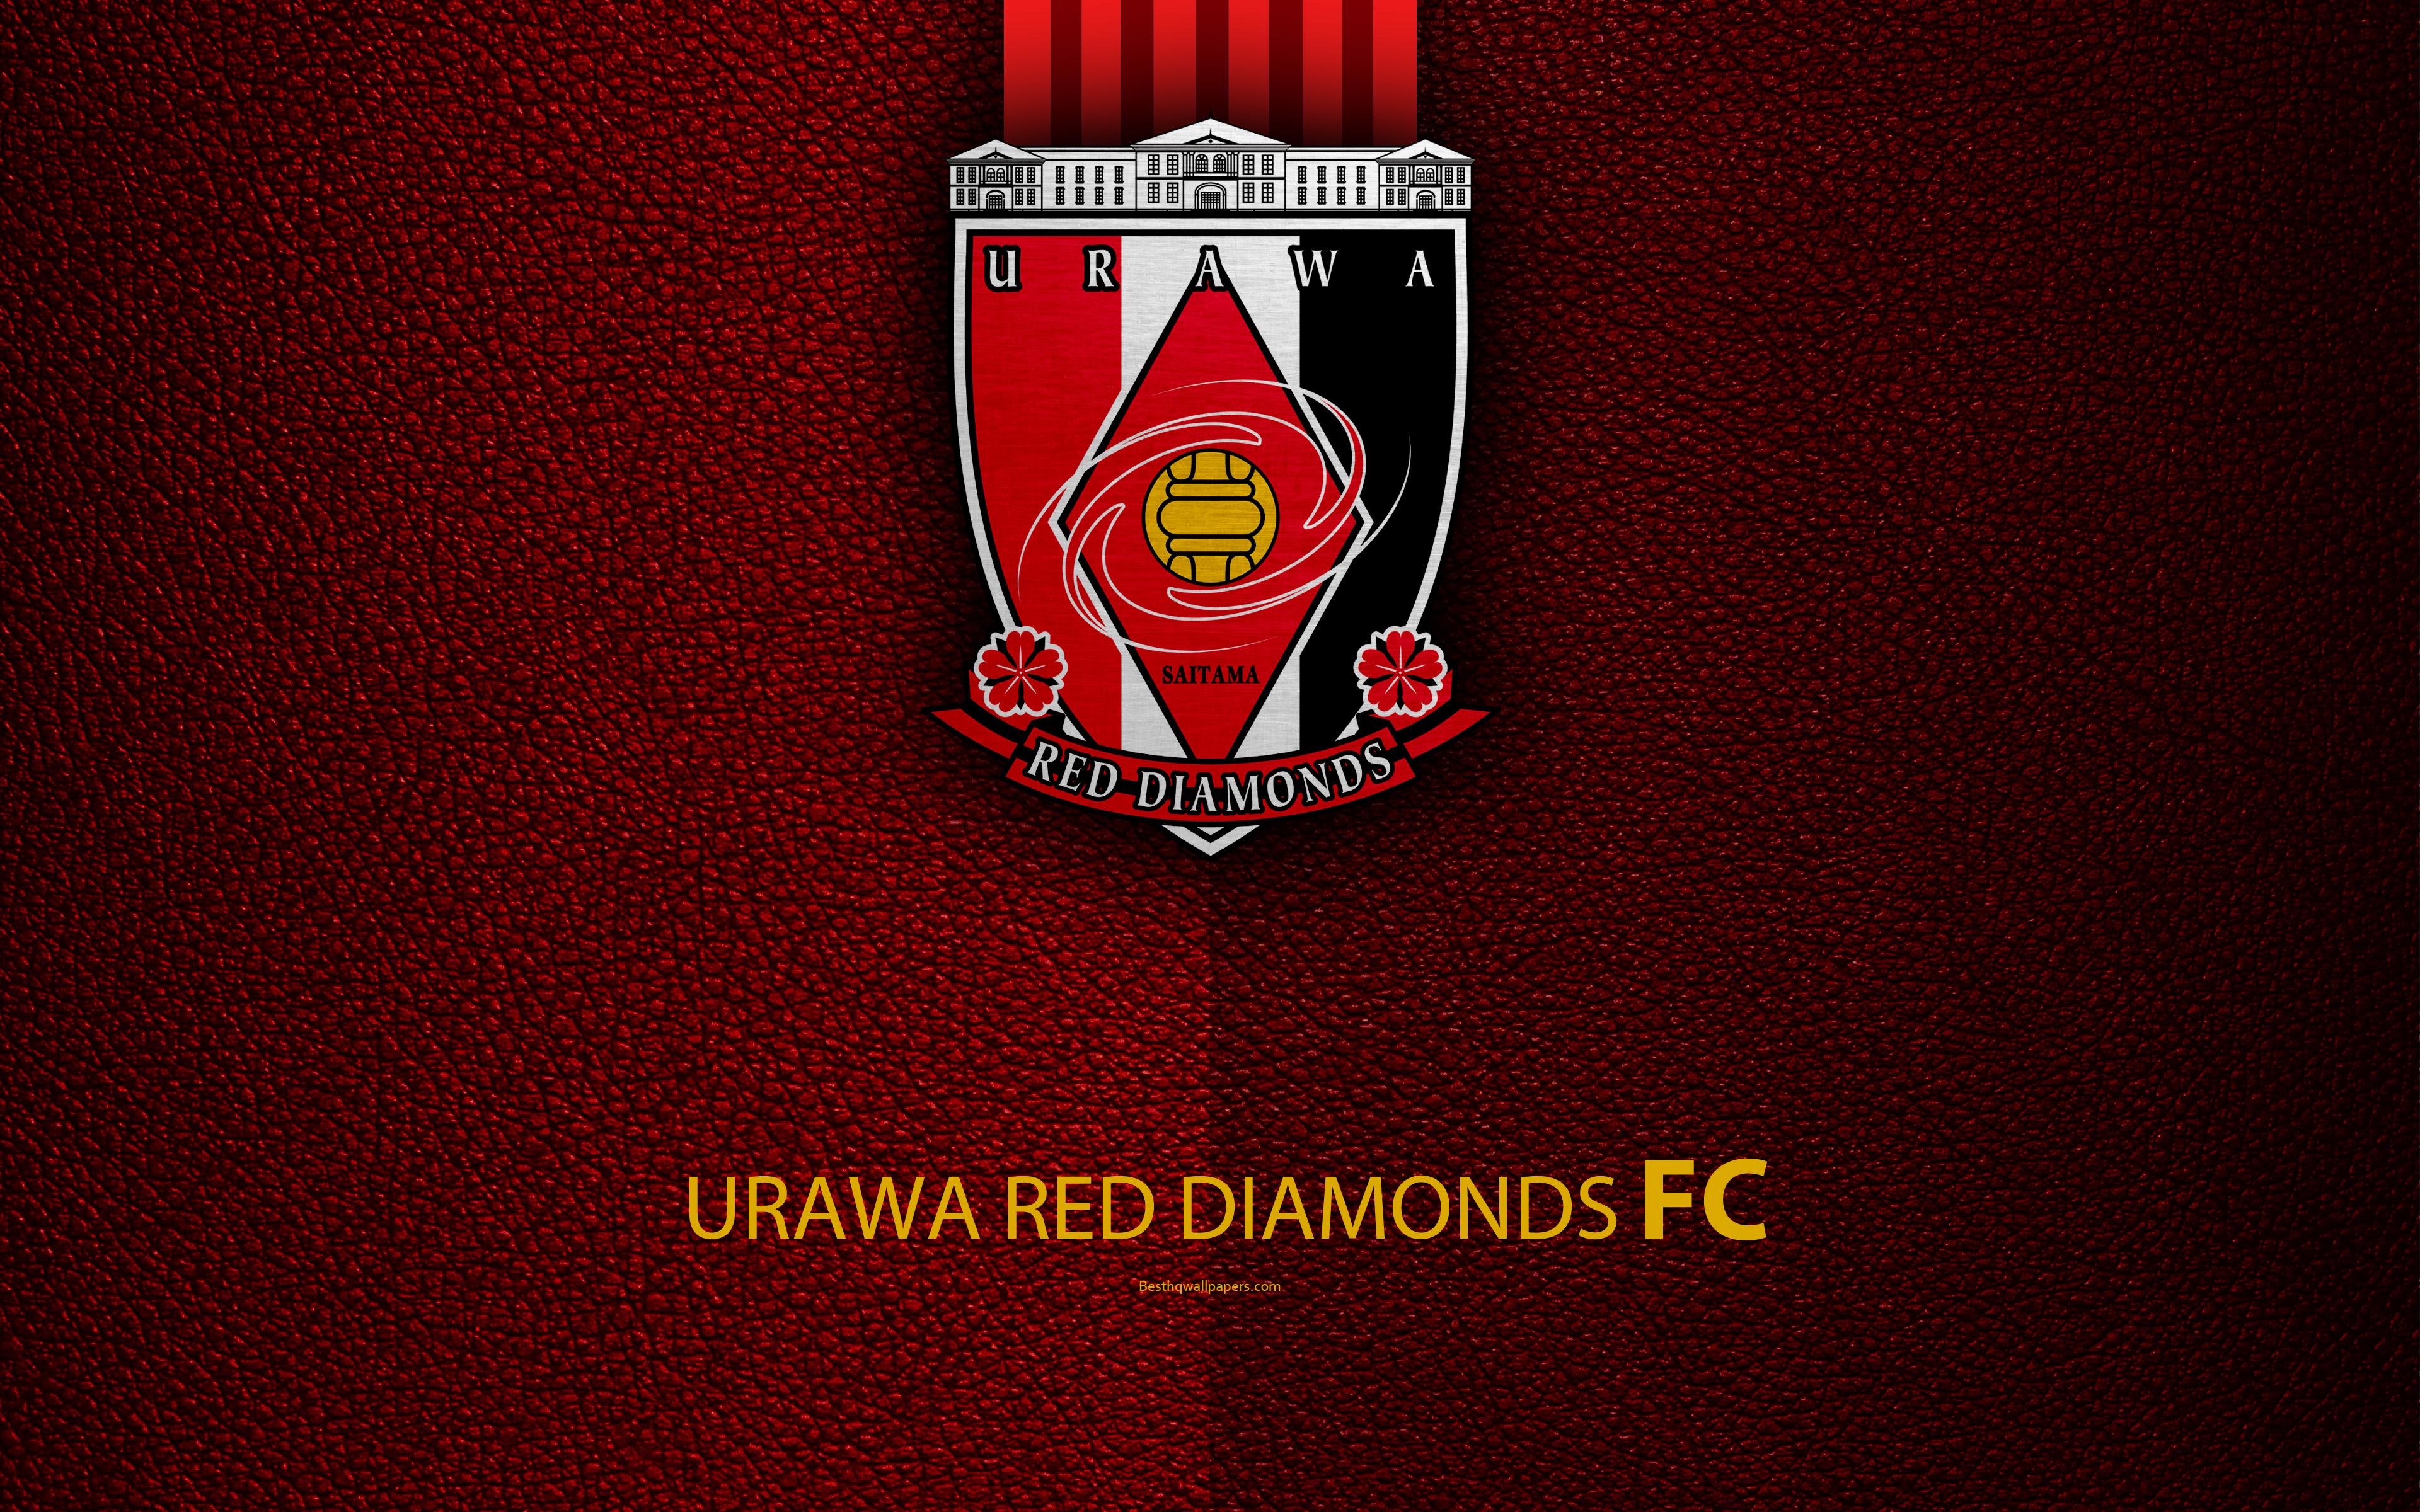 Download wallpaper Urawa Red Diamonds FC, 4k, logo, leather texture